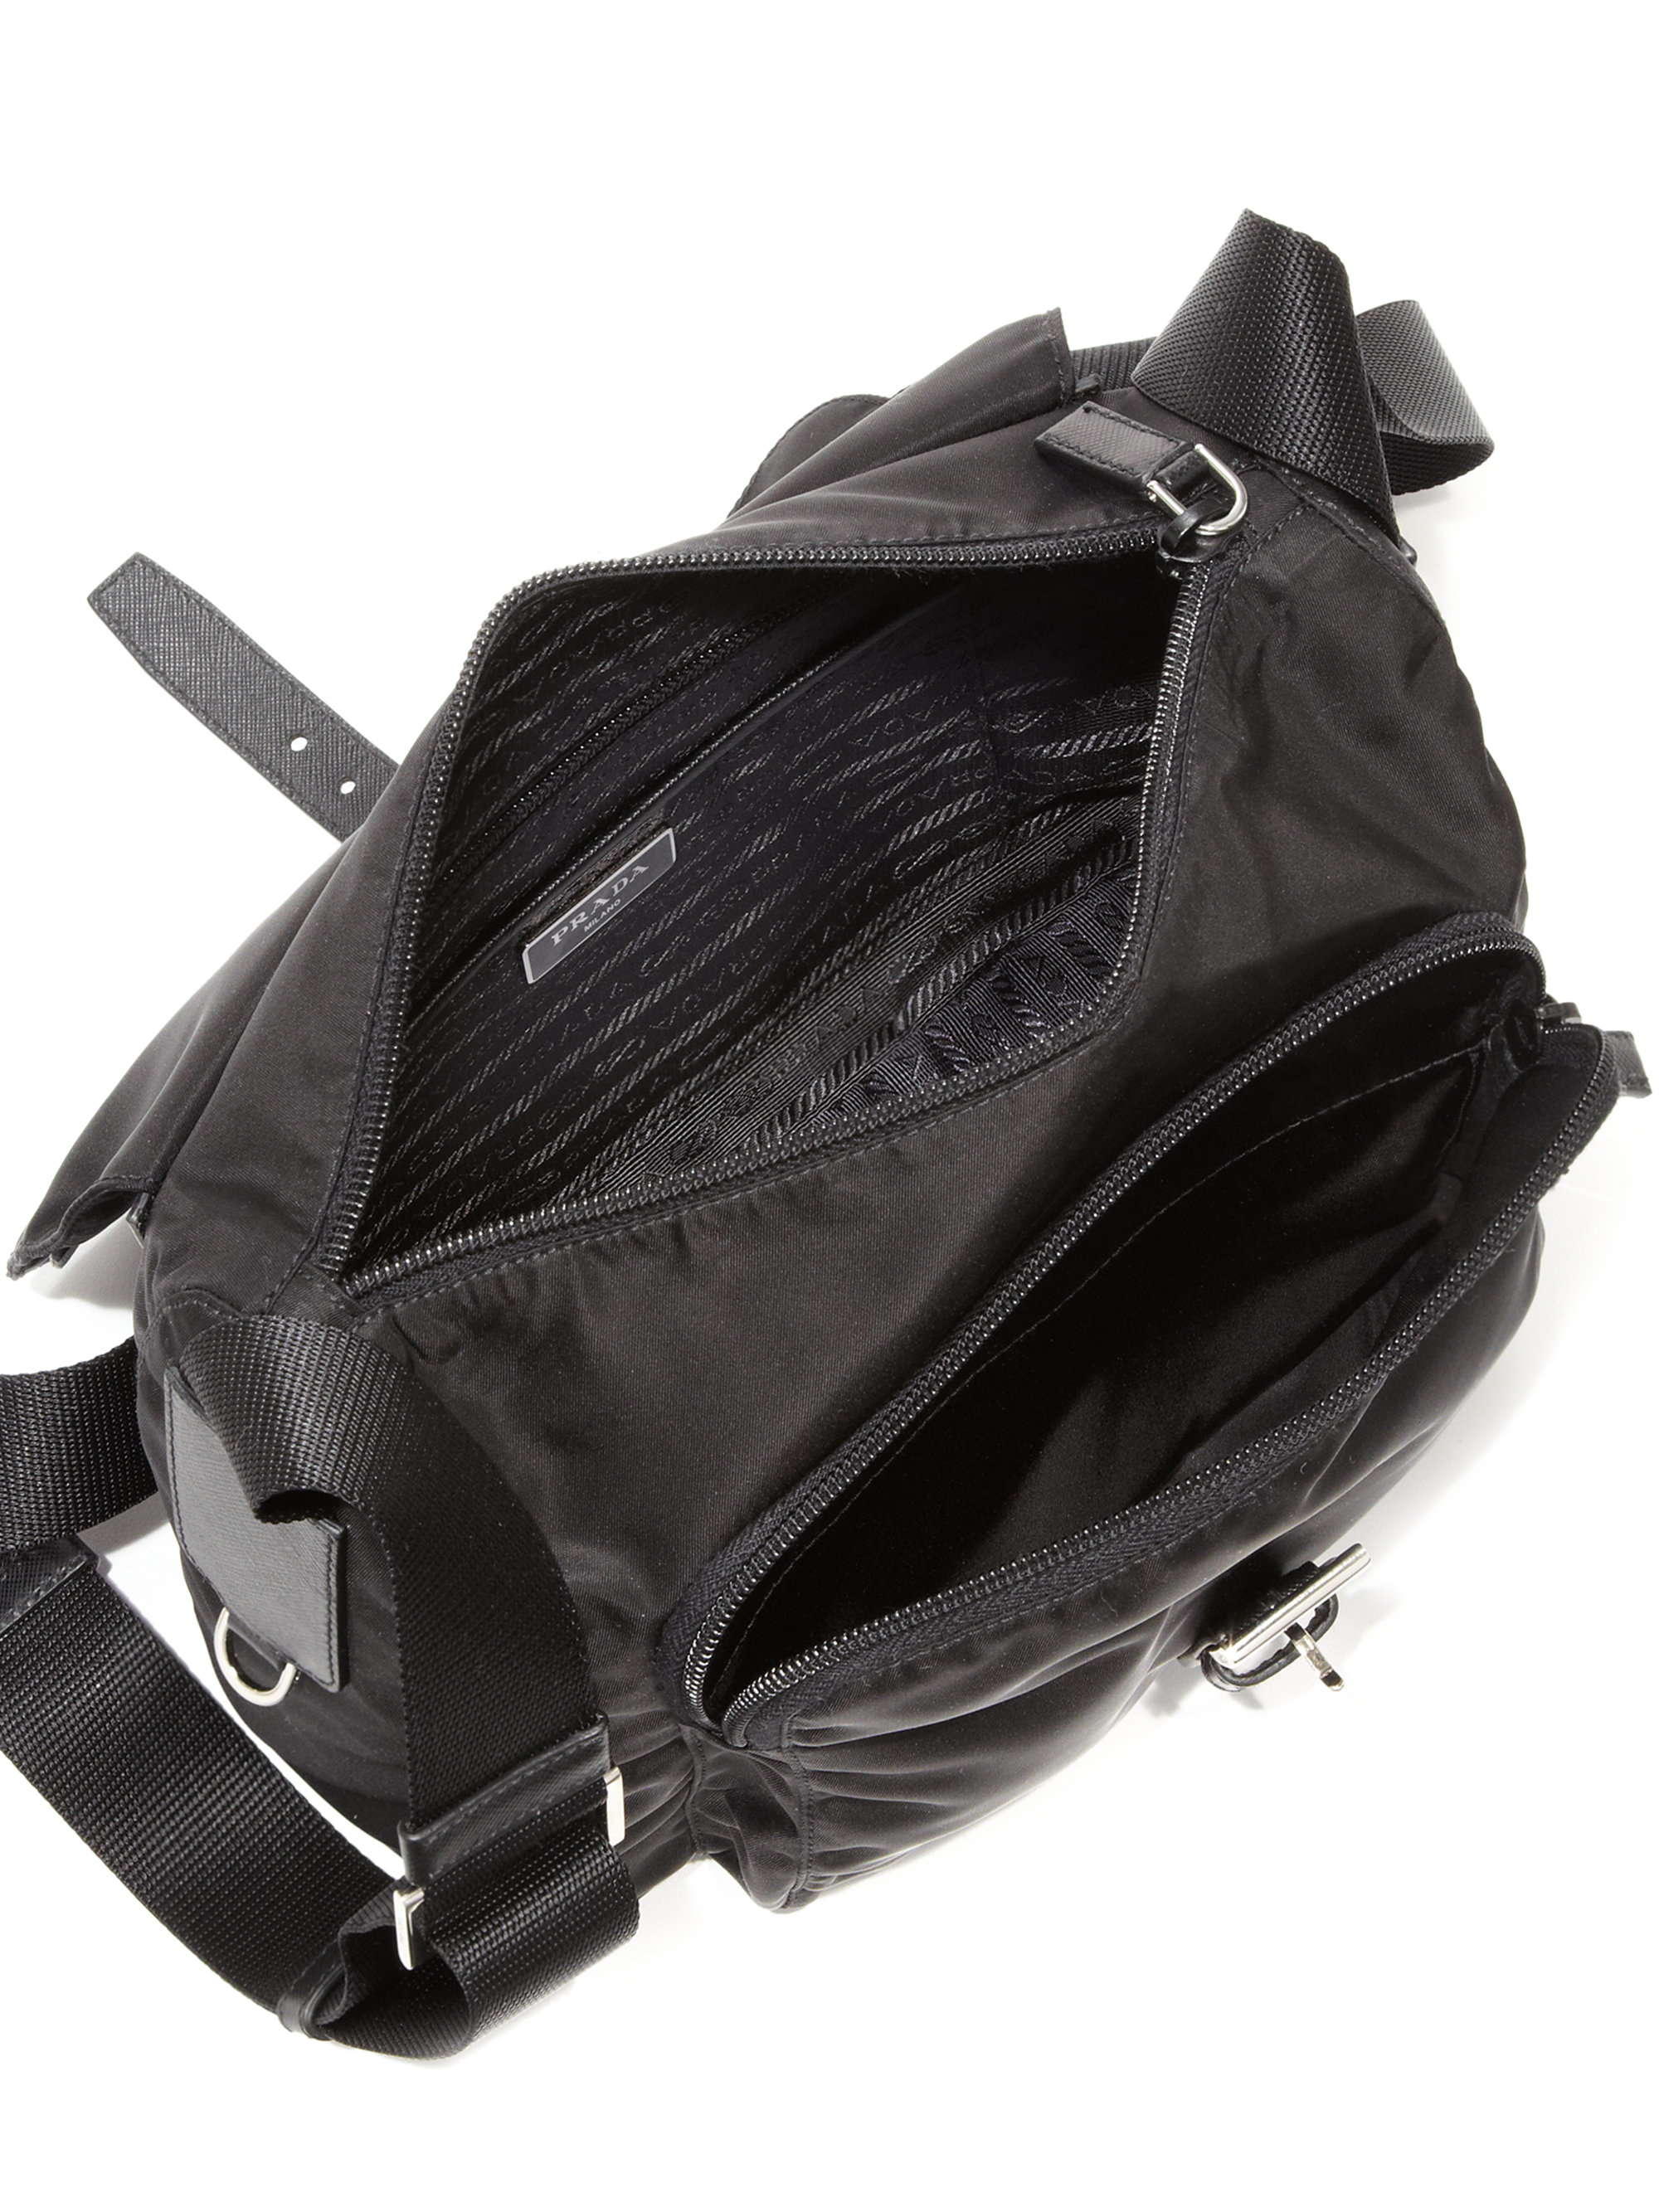 Lyst - Prada Nylon & Leather Crossbody Bag in Black